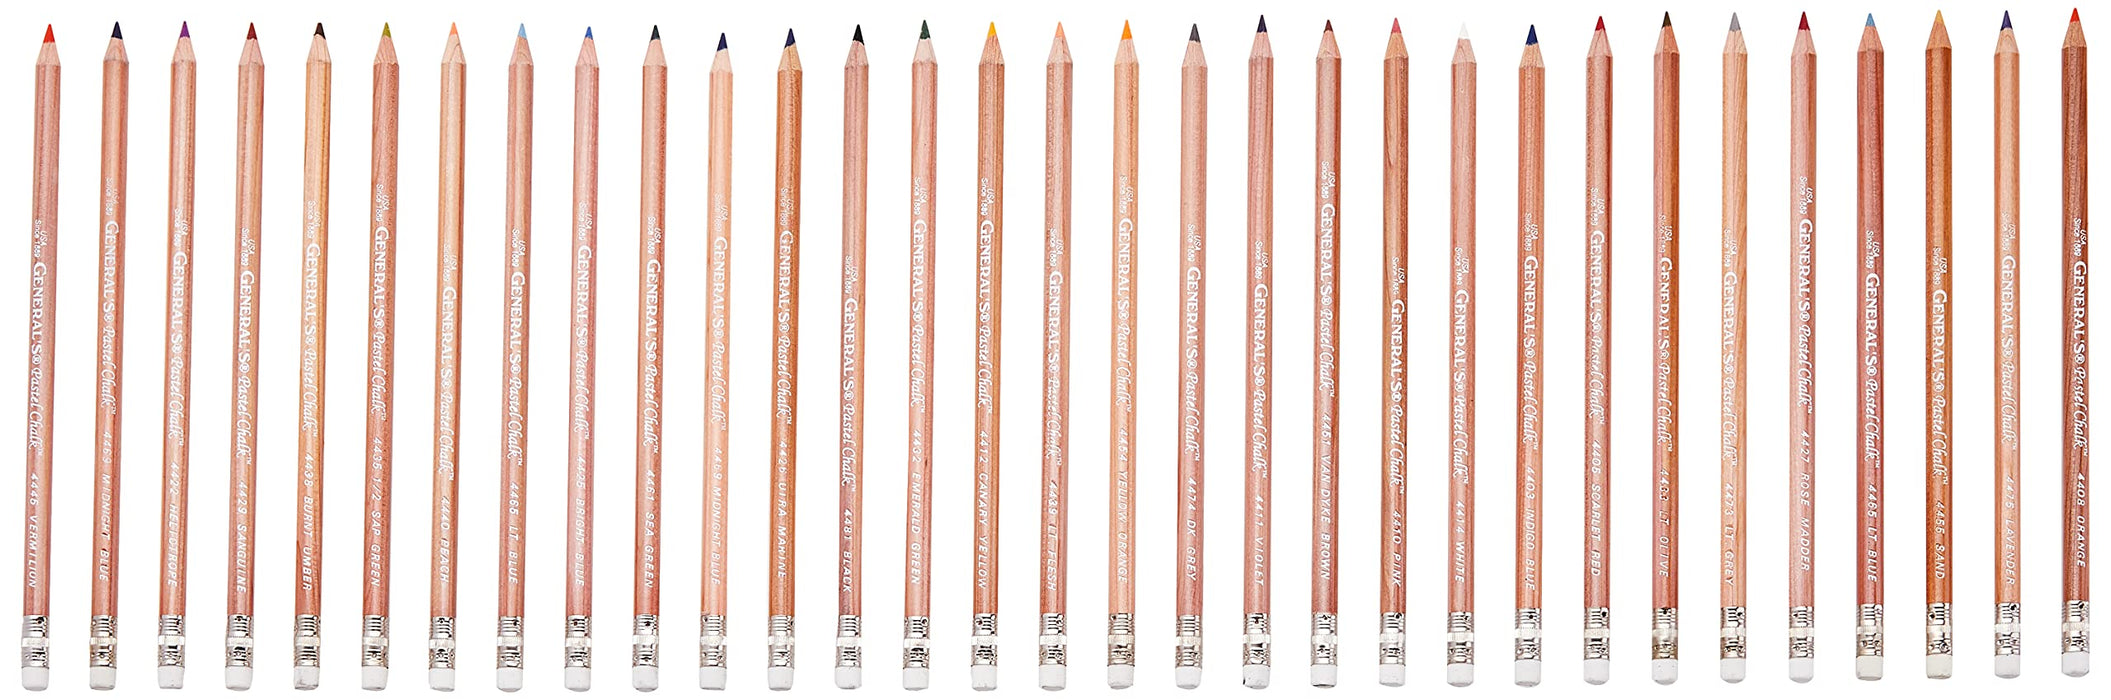 General's Chalk Pencils